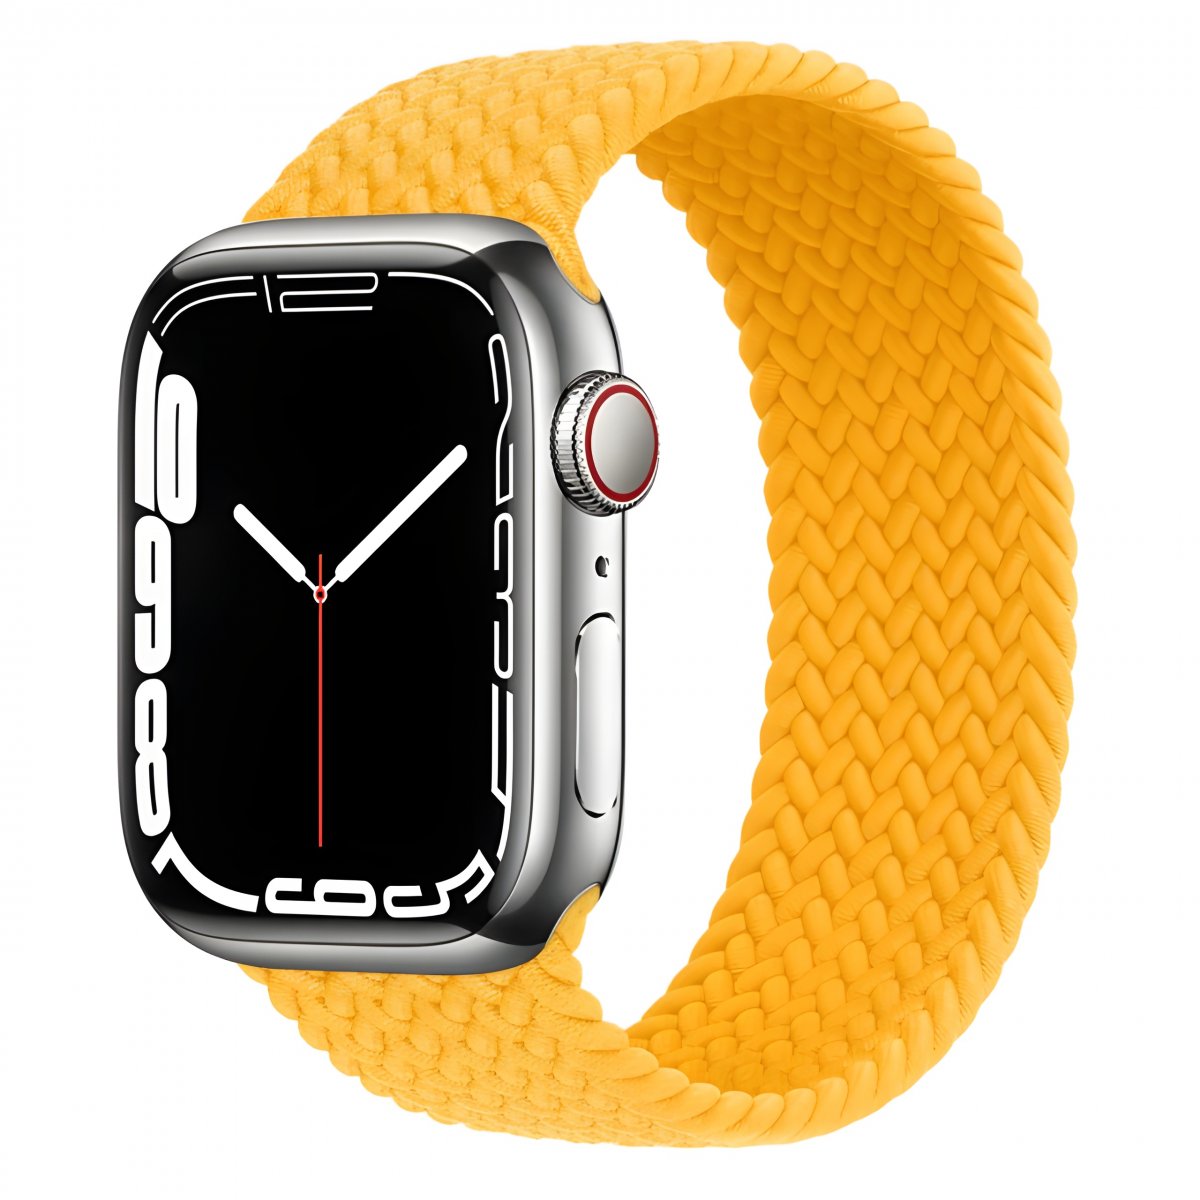 Řemínek iMore Braided Solo Loop Apple Watch Series 1/2/3 42mm - oranžovožlutý (L)